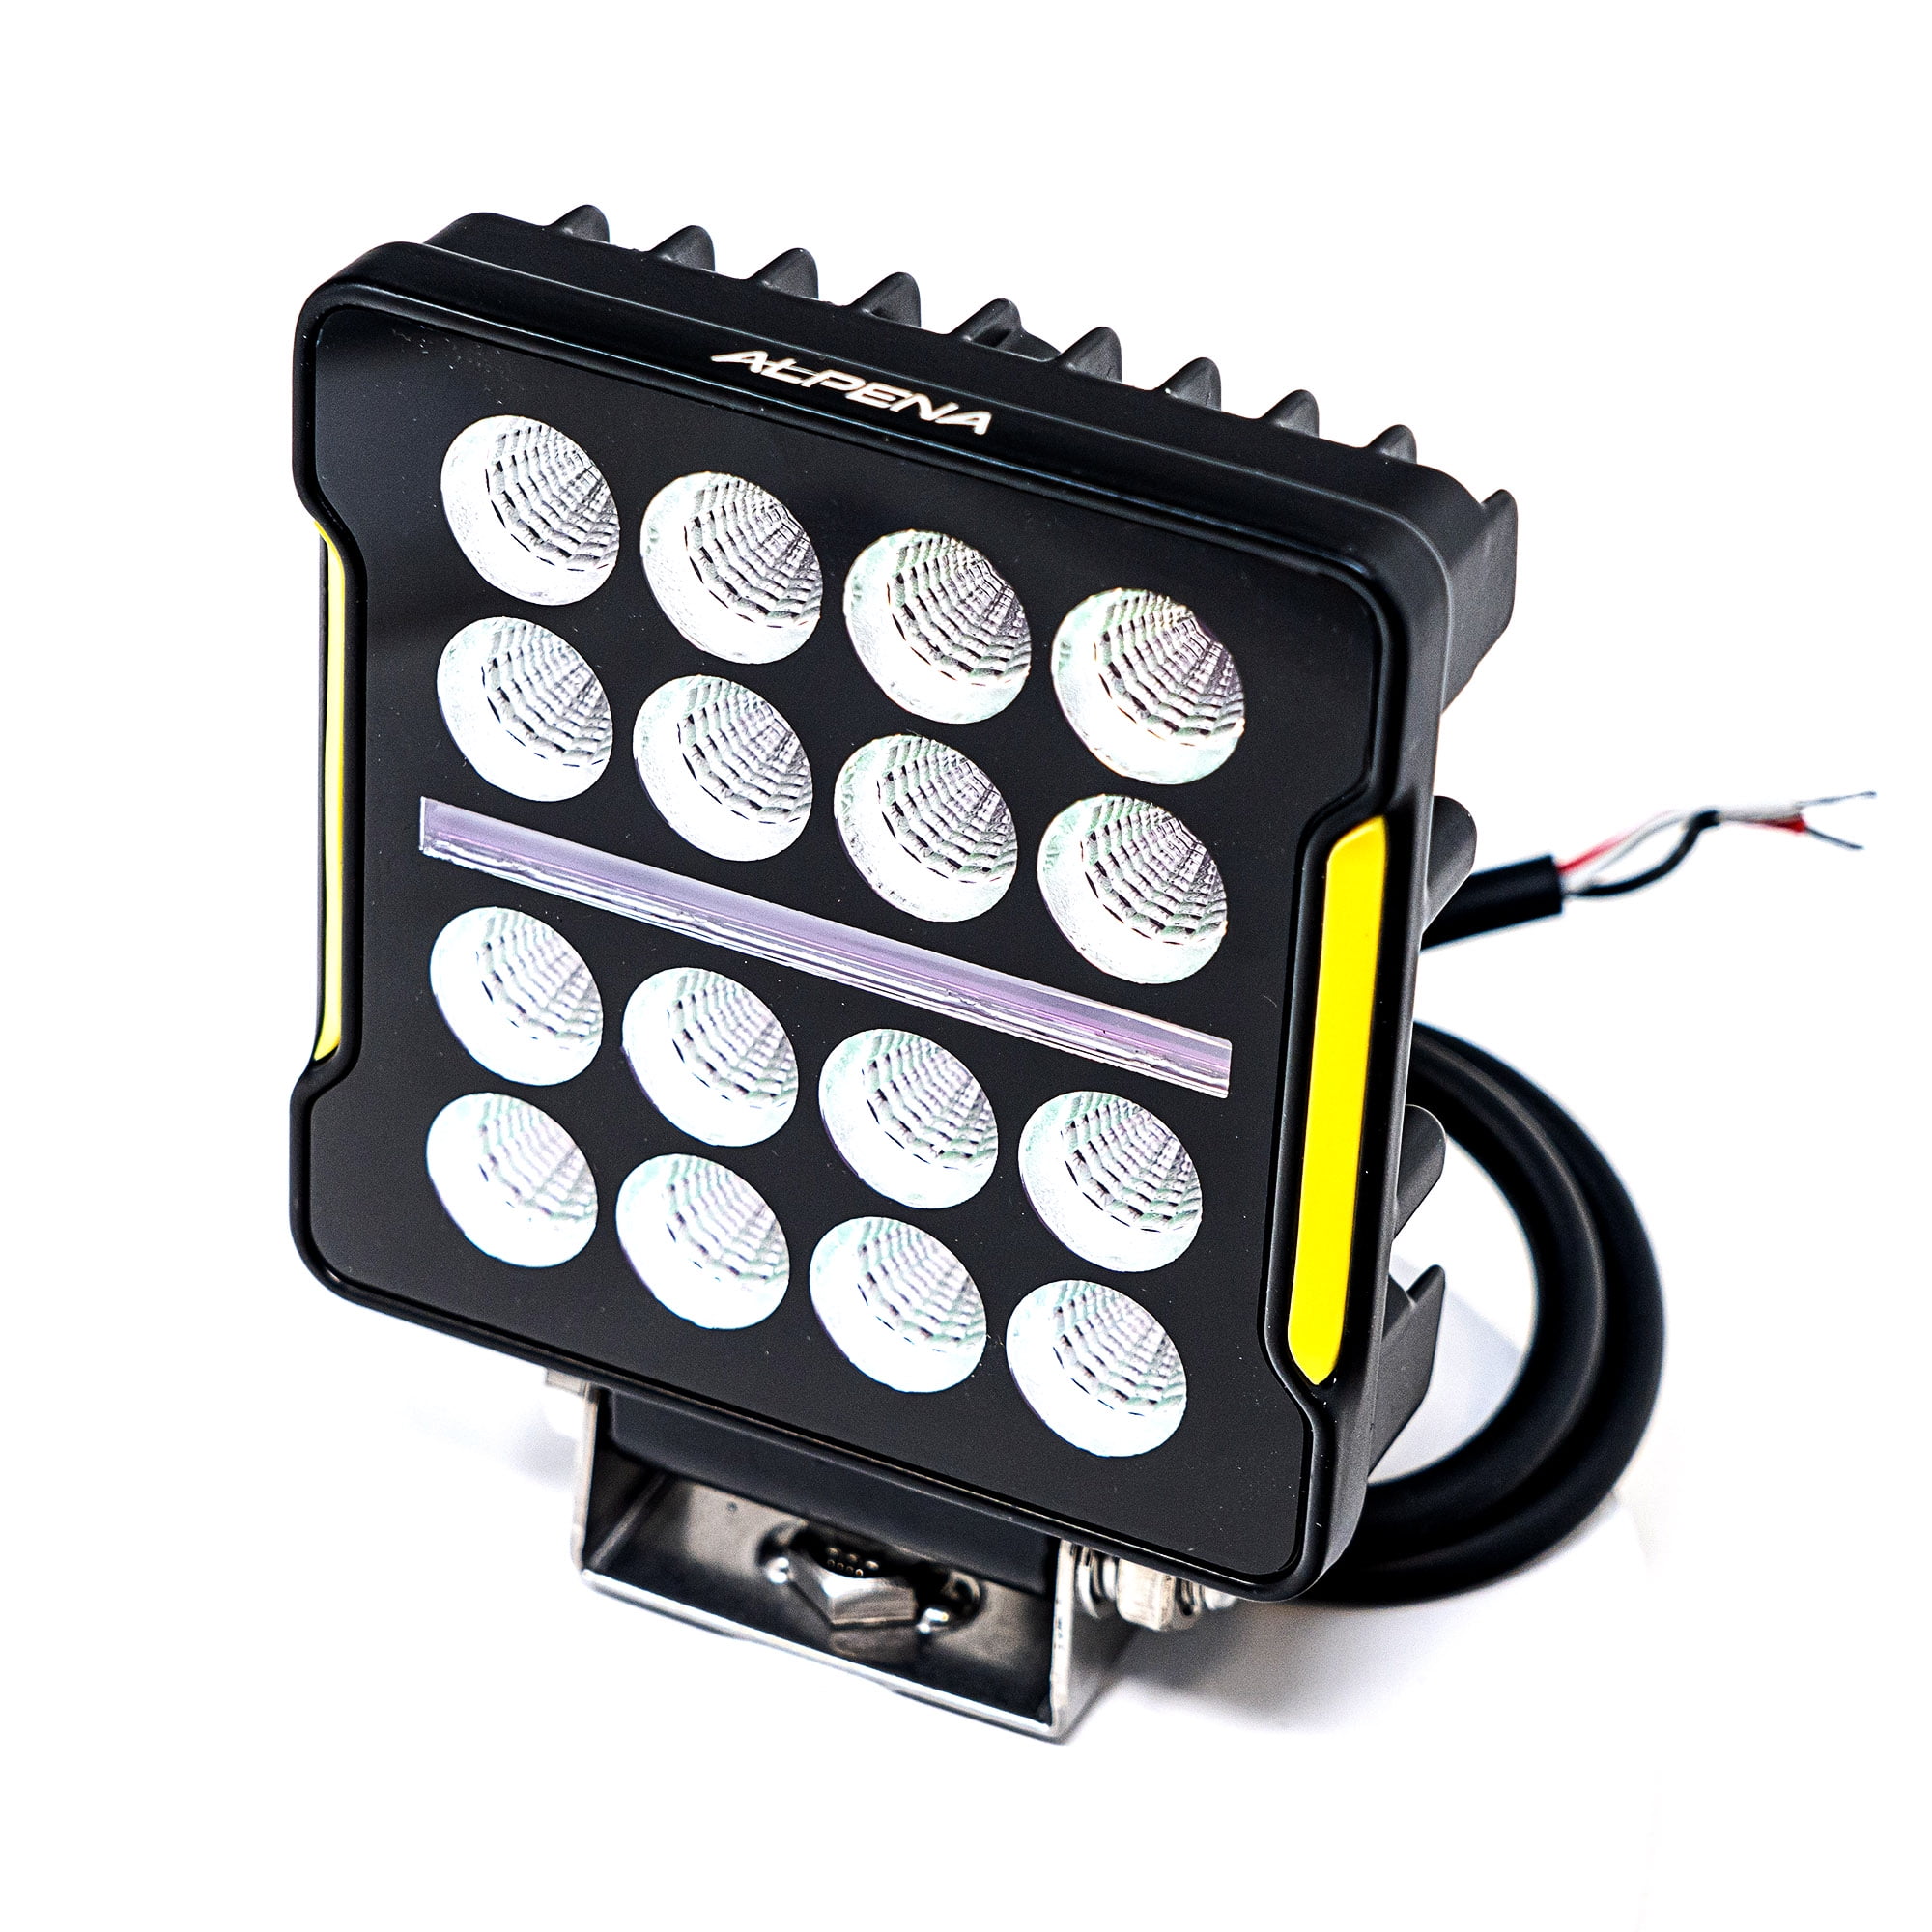 Alpena TrekTec LED Pod Spotlight XL16-P, 12V, Model 71072, Universal Fit for Vehicles